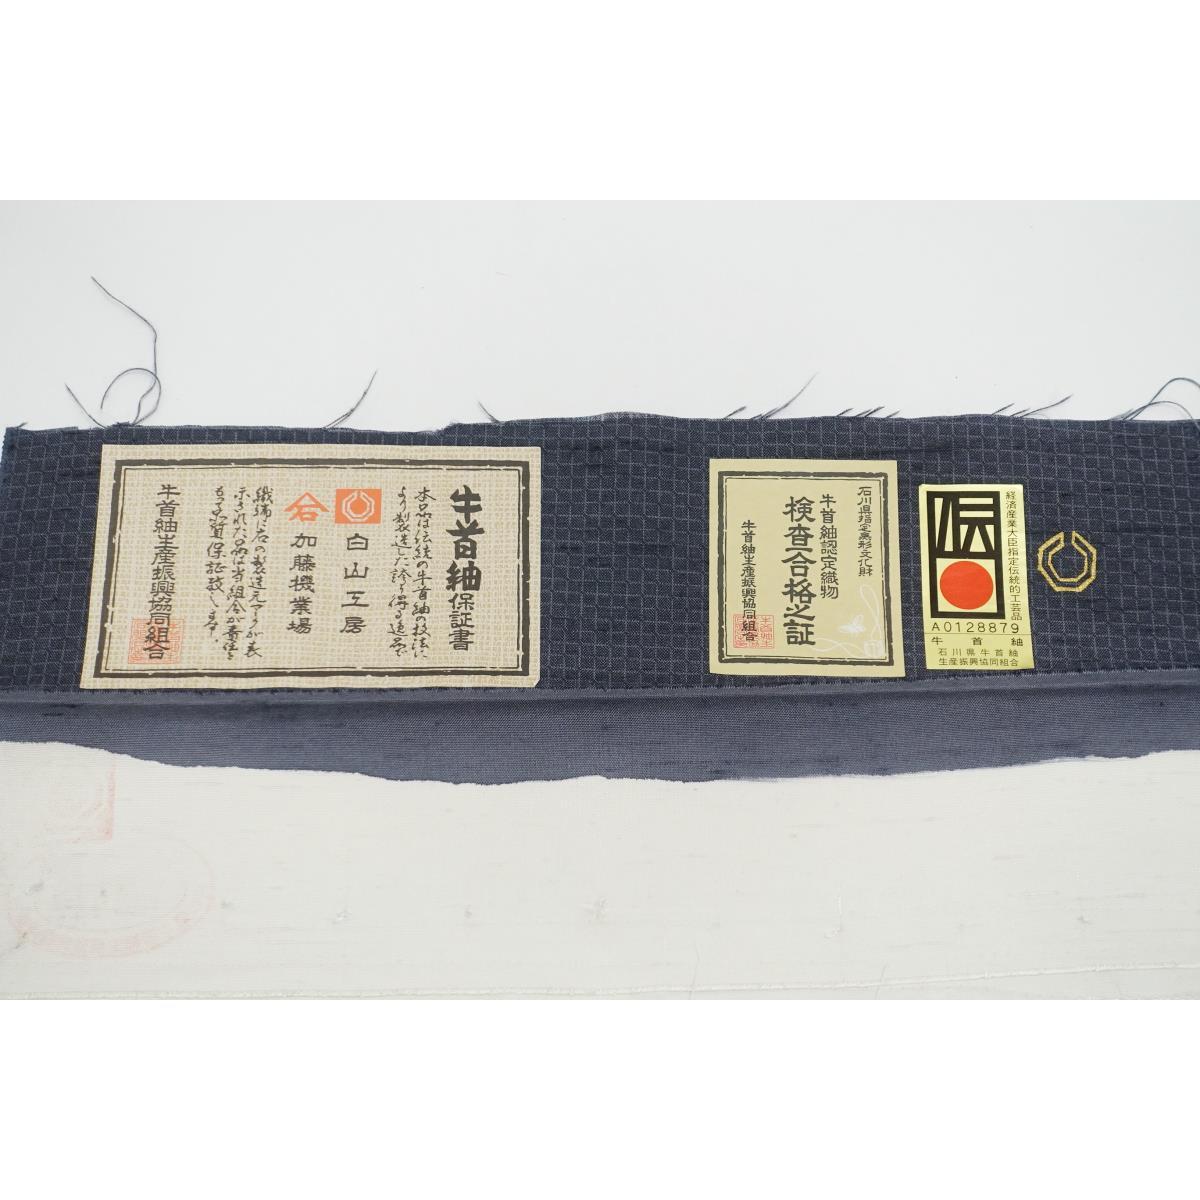 [Unused items] Tsumugi Ushikubi Tsumugi certificate stamp included